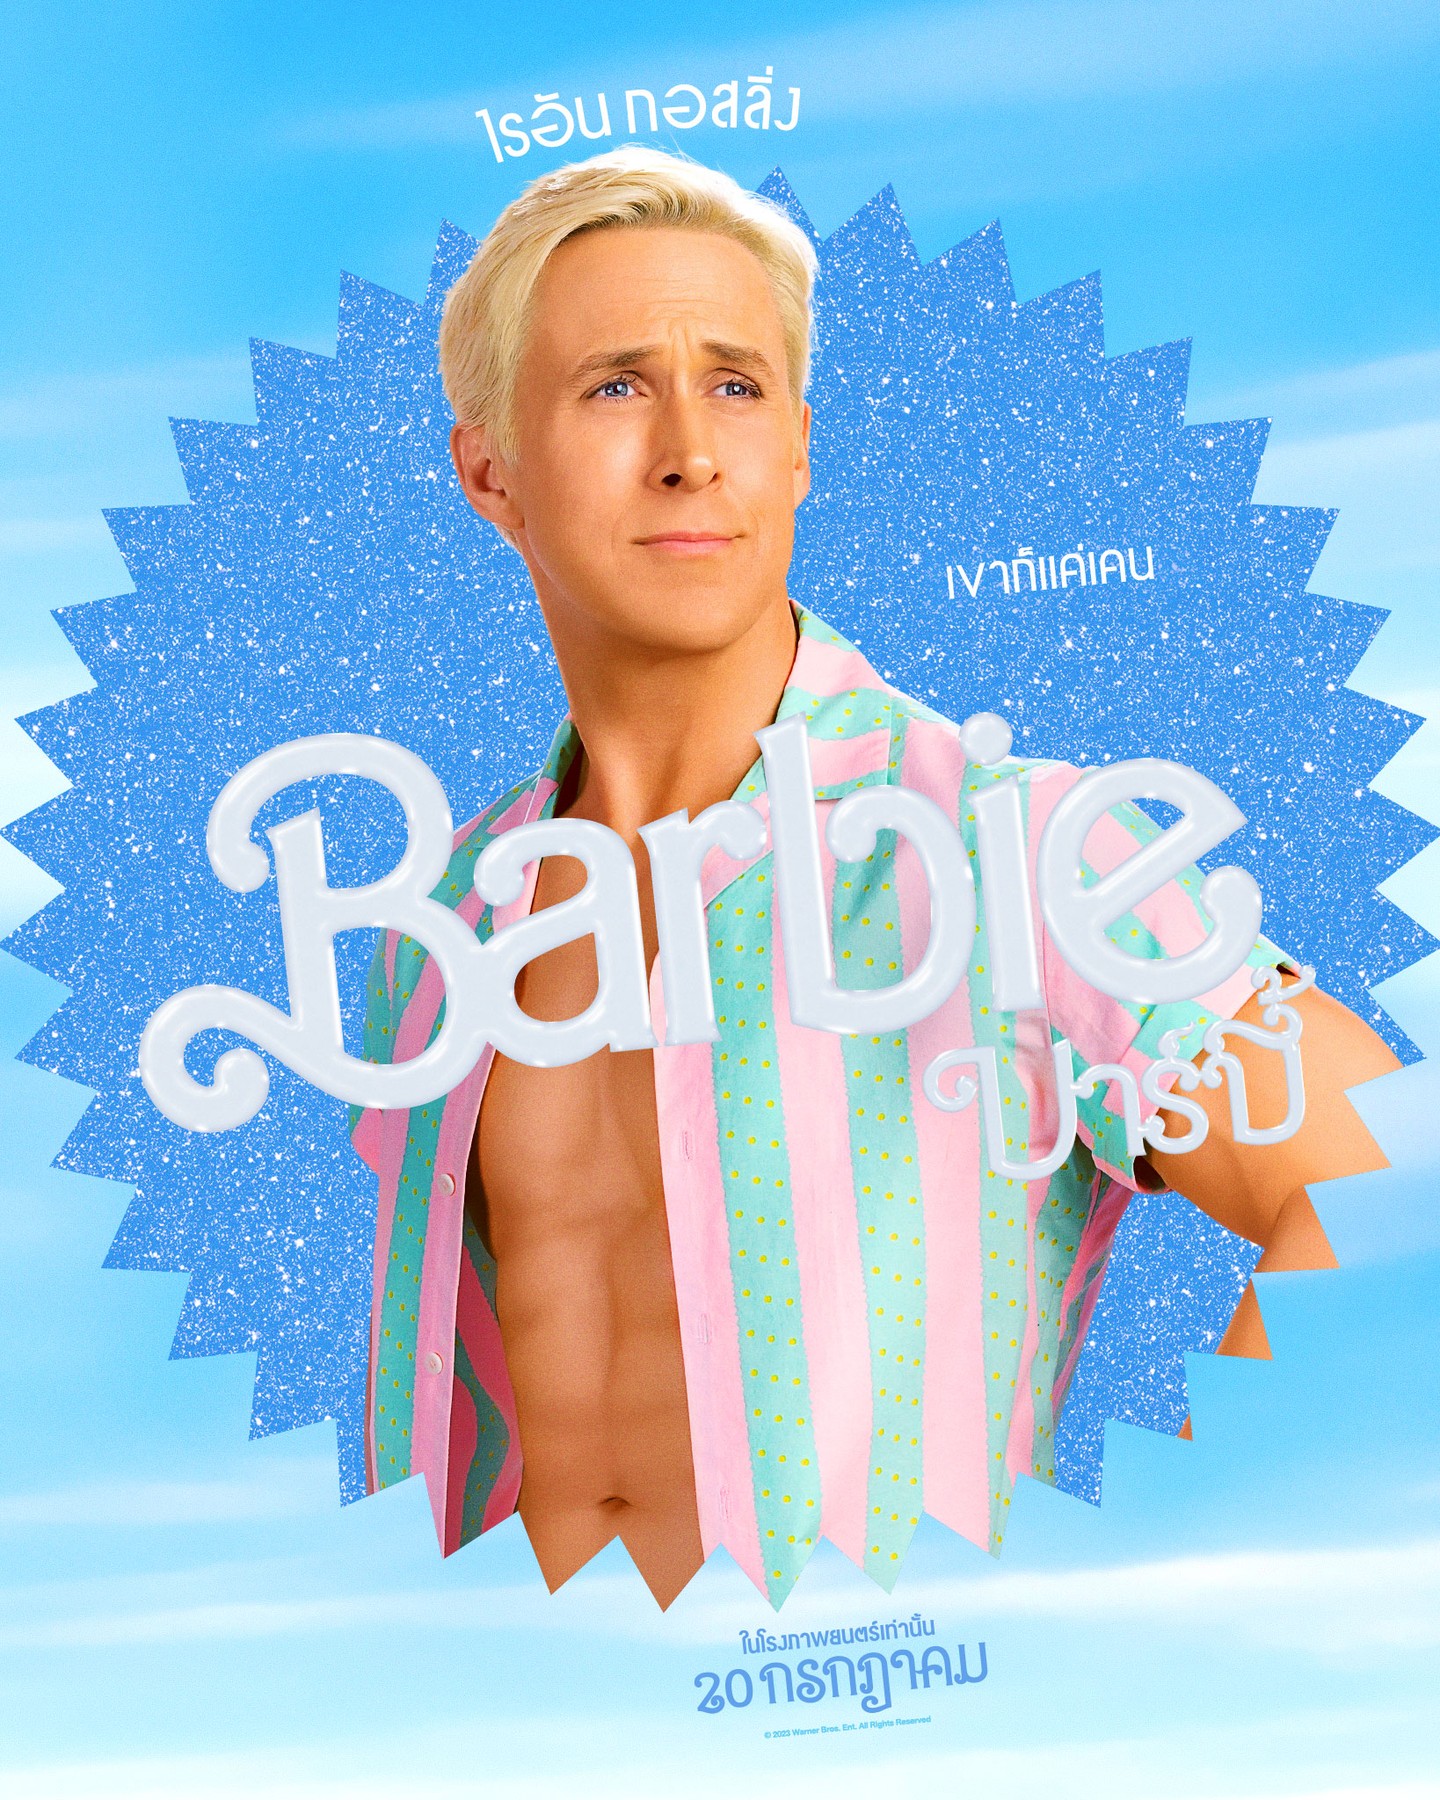 Barbie (บาร์บี้)